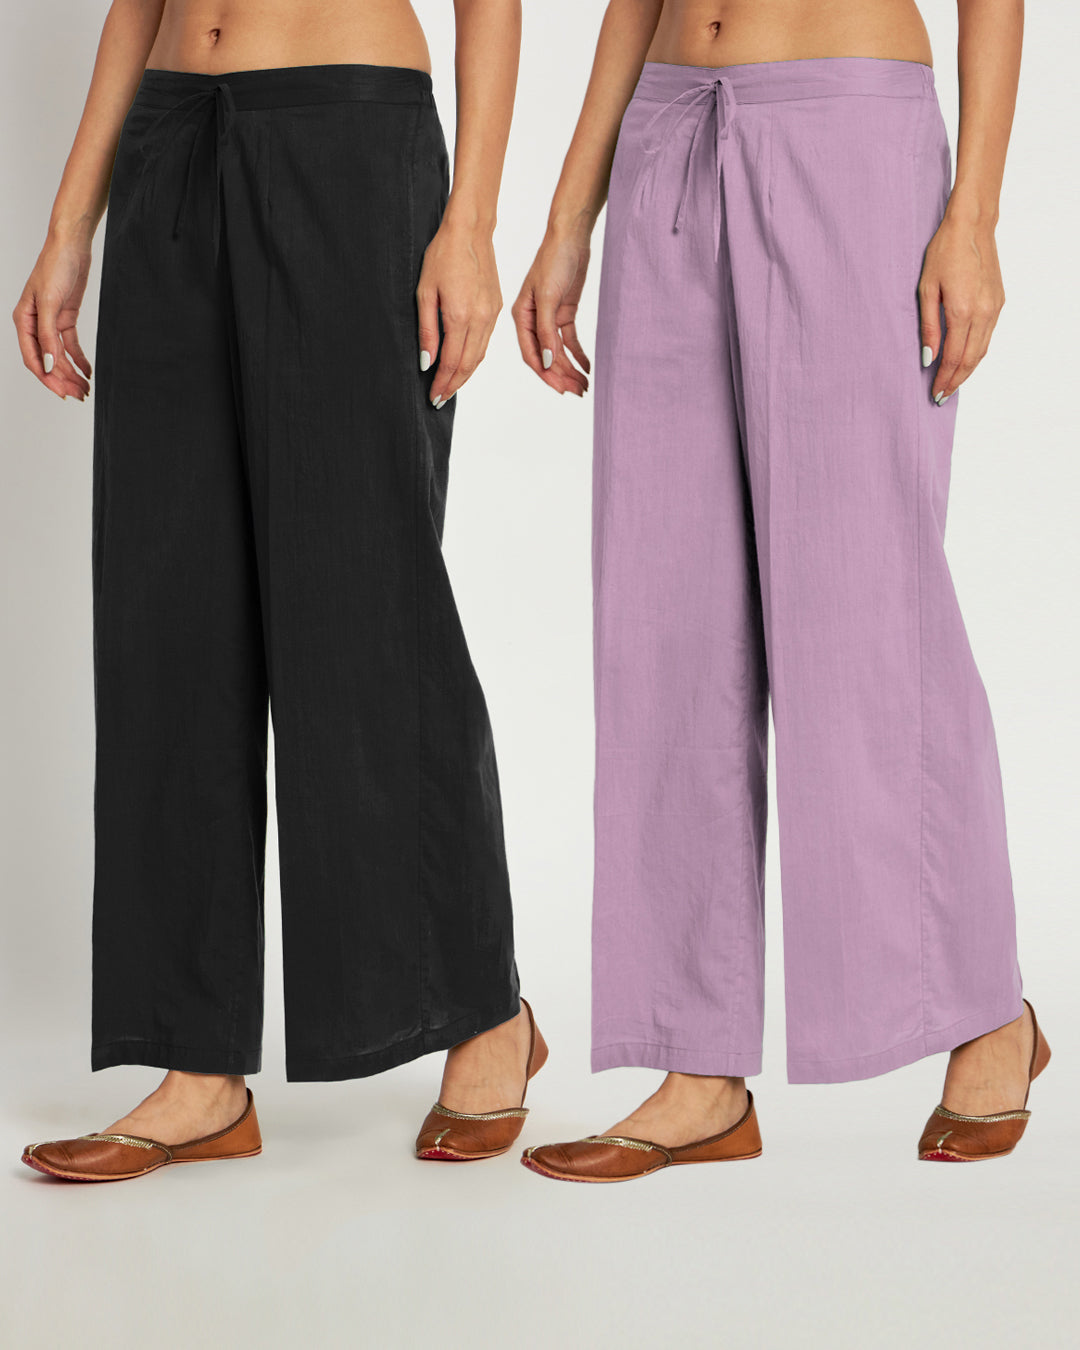 Combo: Black & Iris Pink Wide Pants- Set Of 2